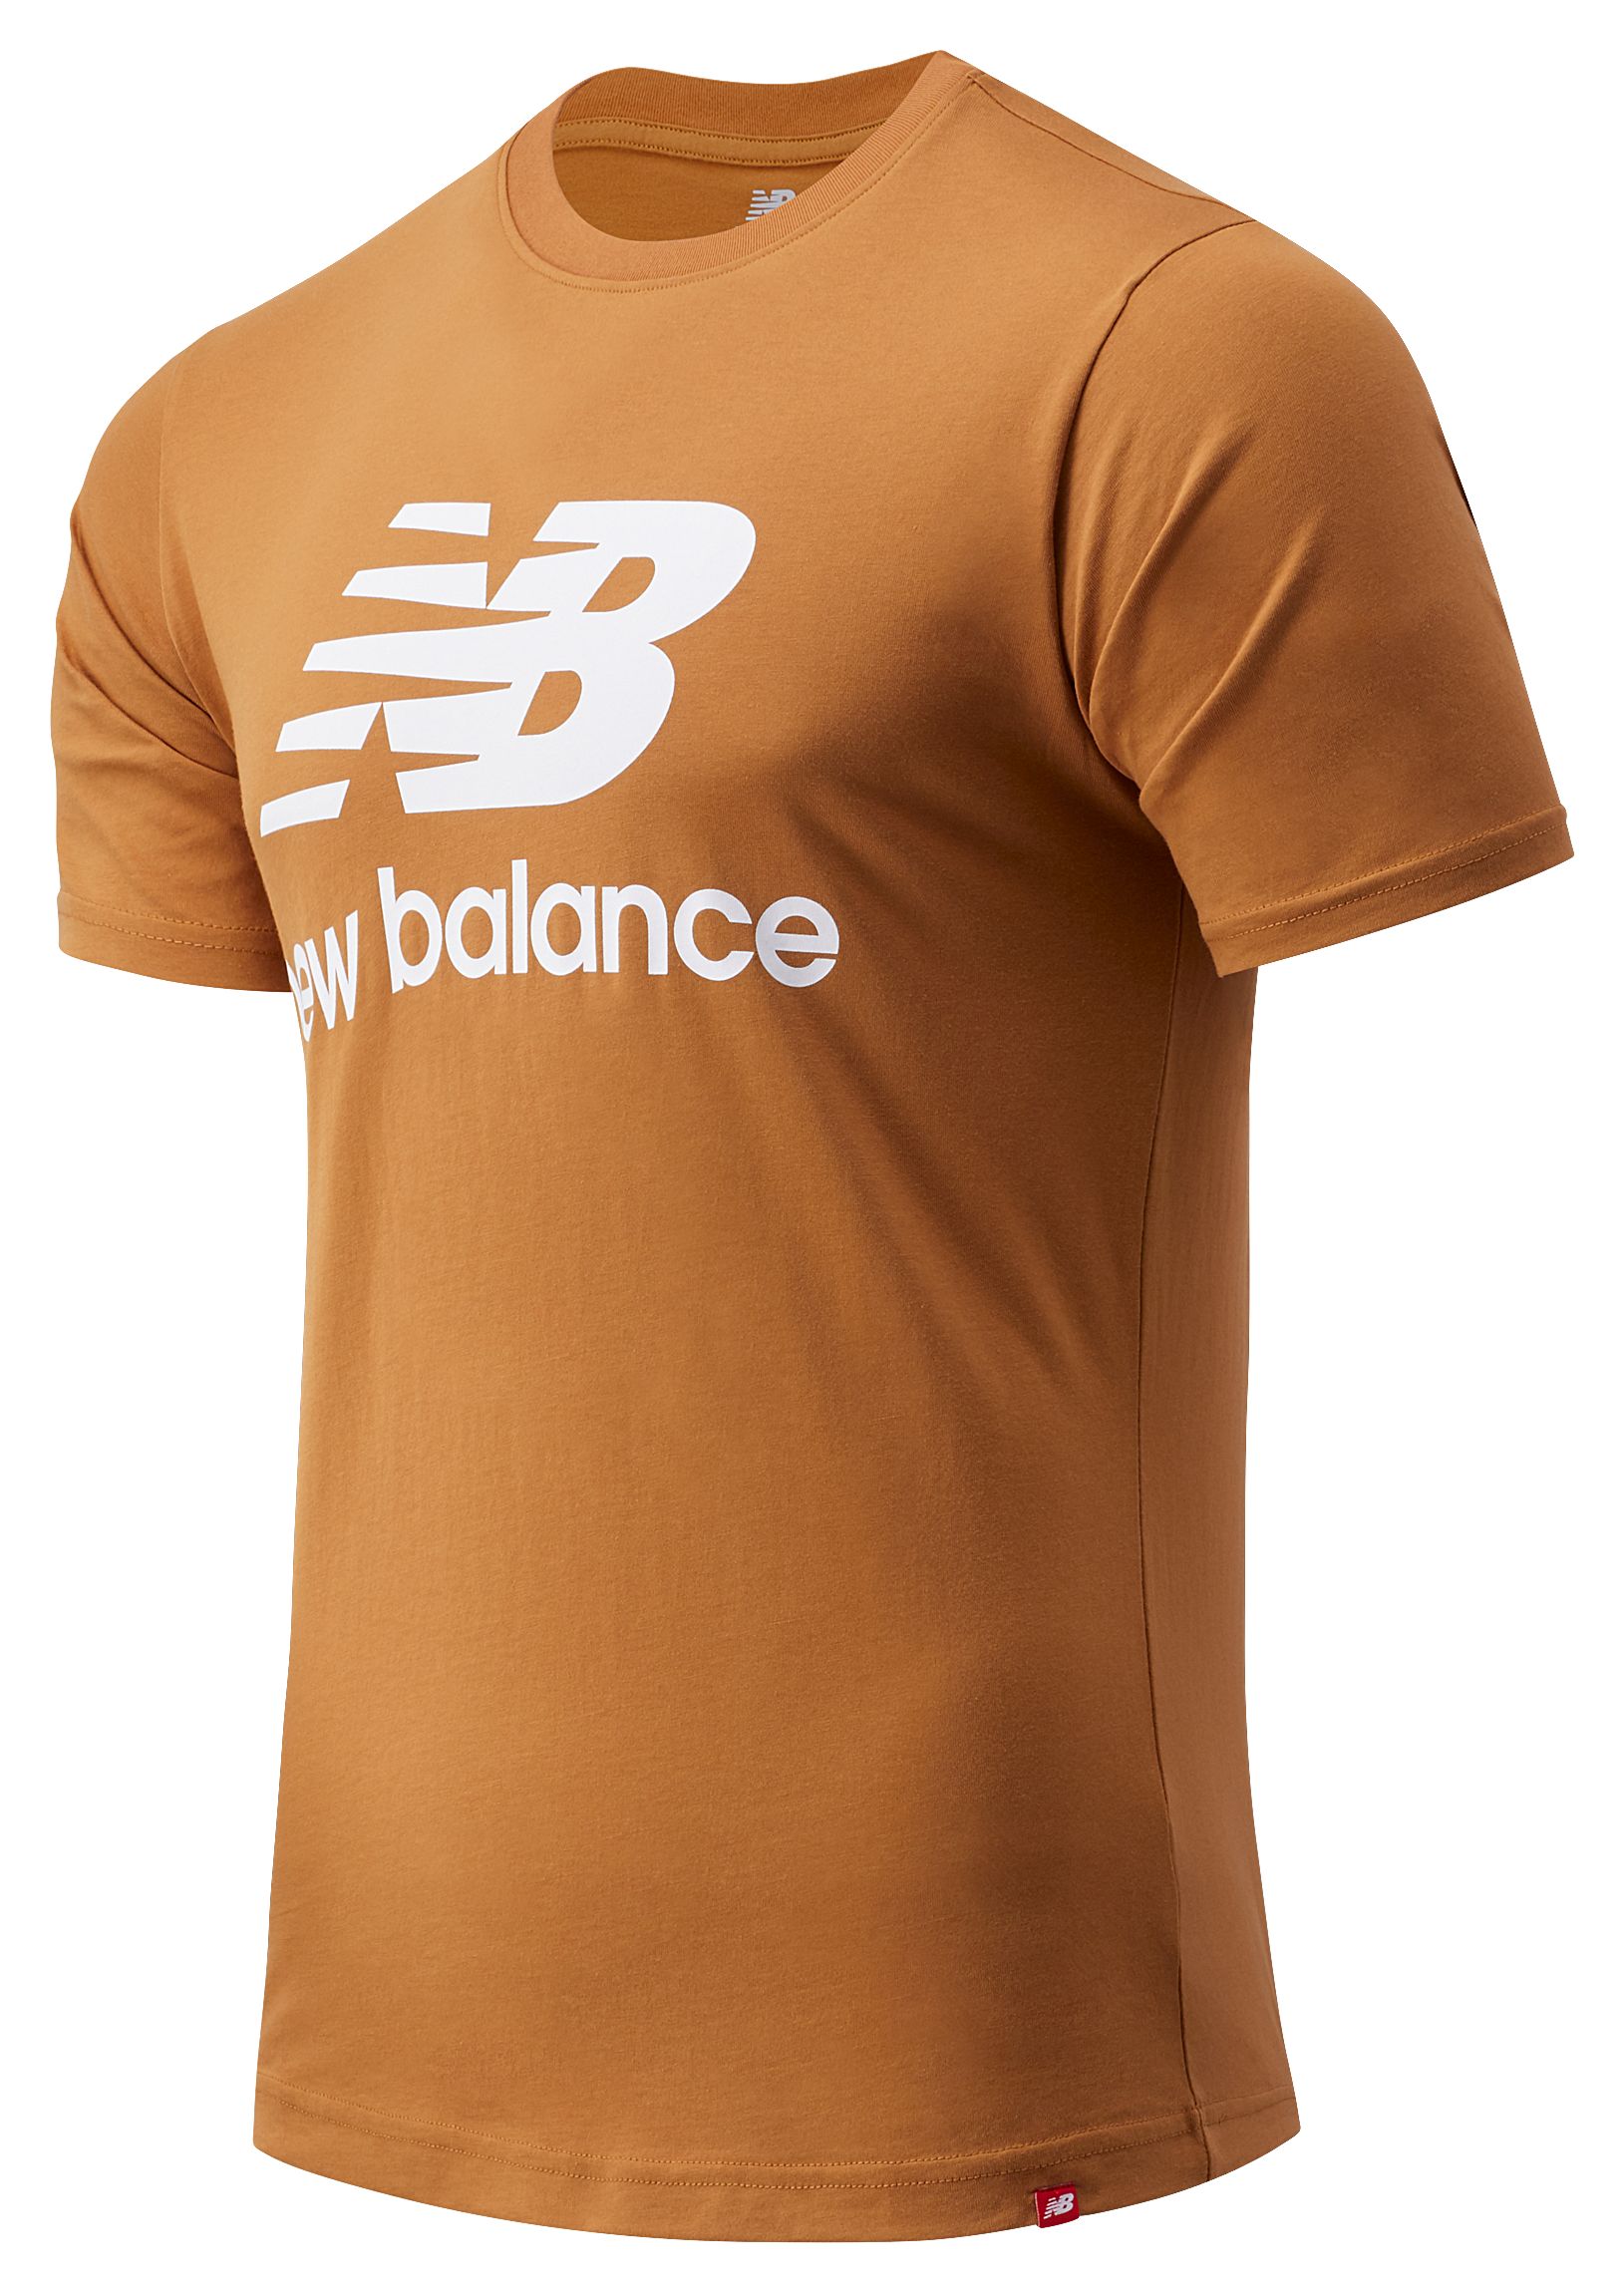 new balance t shirt mens